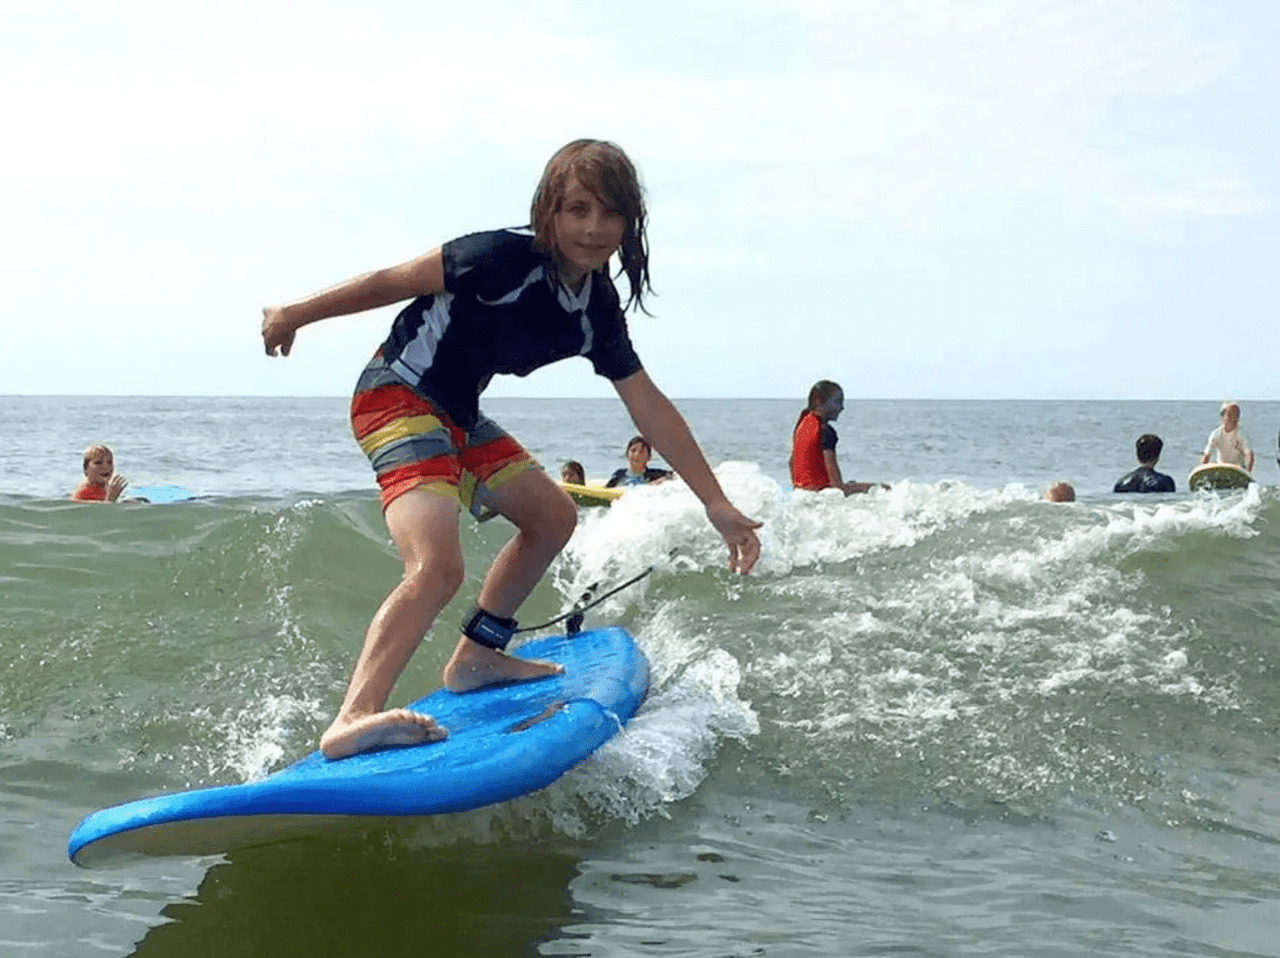 Liquid Shredder 8ft EZ-Slider Foam Surfboard - Good Wave